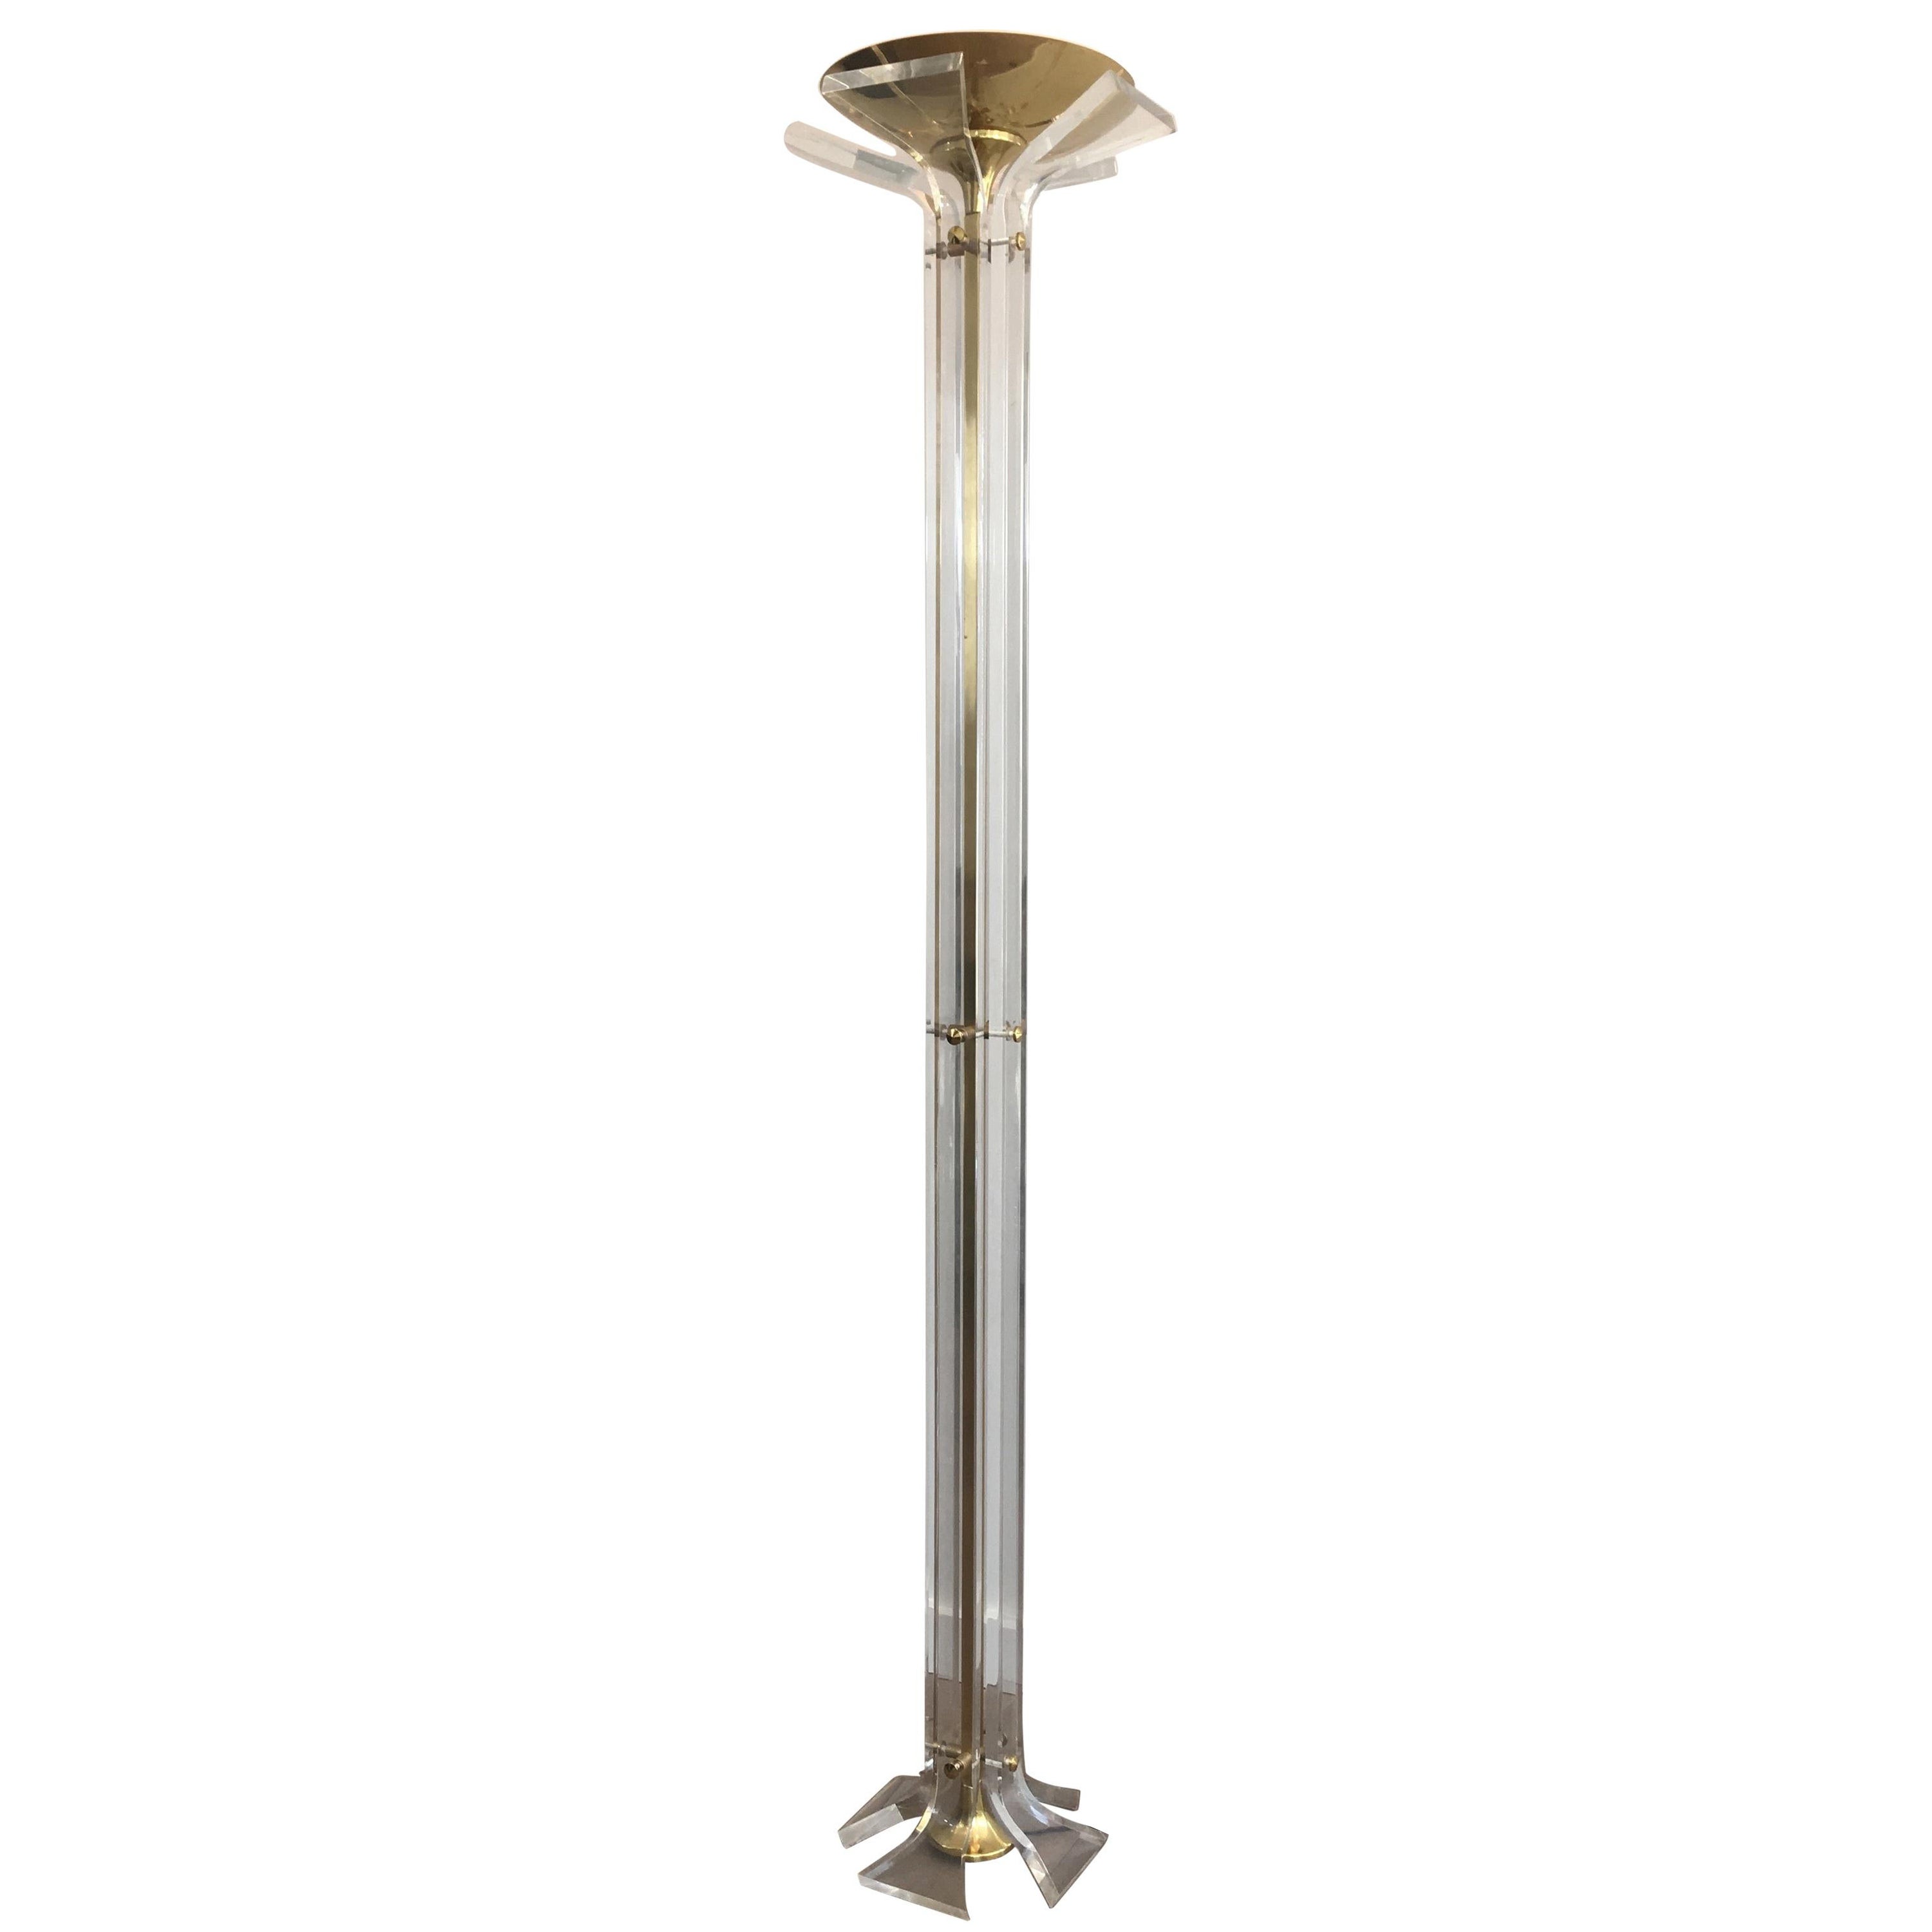 In the Style of Romeo Rega, Rare Plexiglass and Gilt Brass Floor Lamp